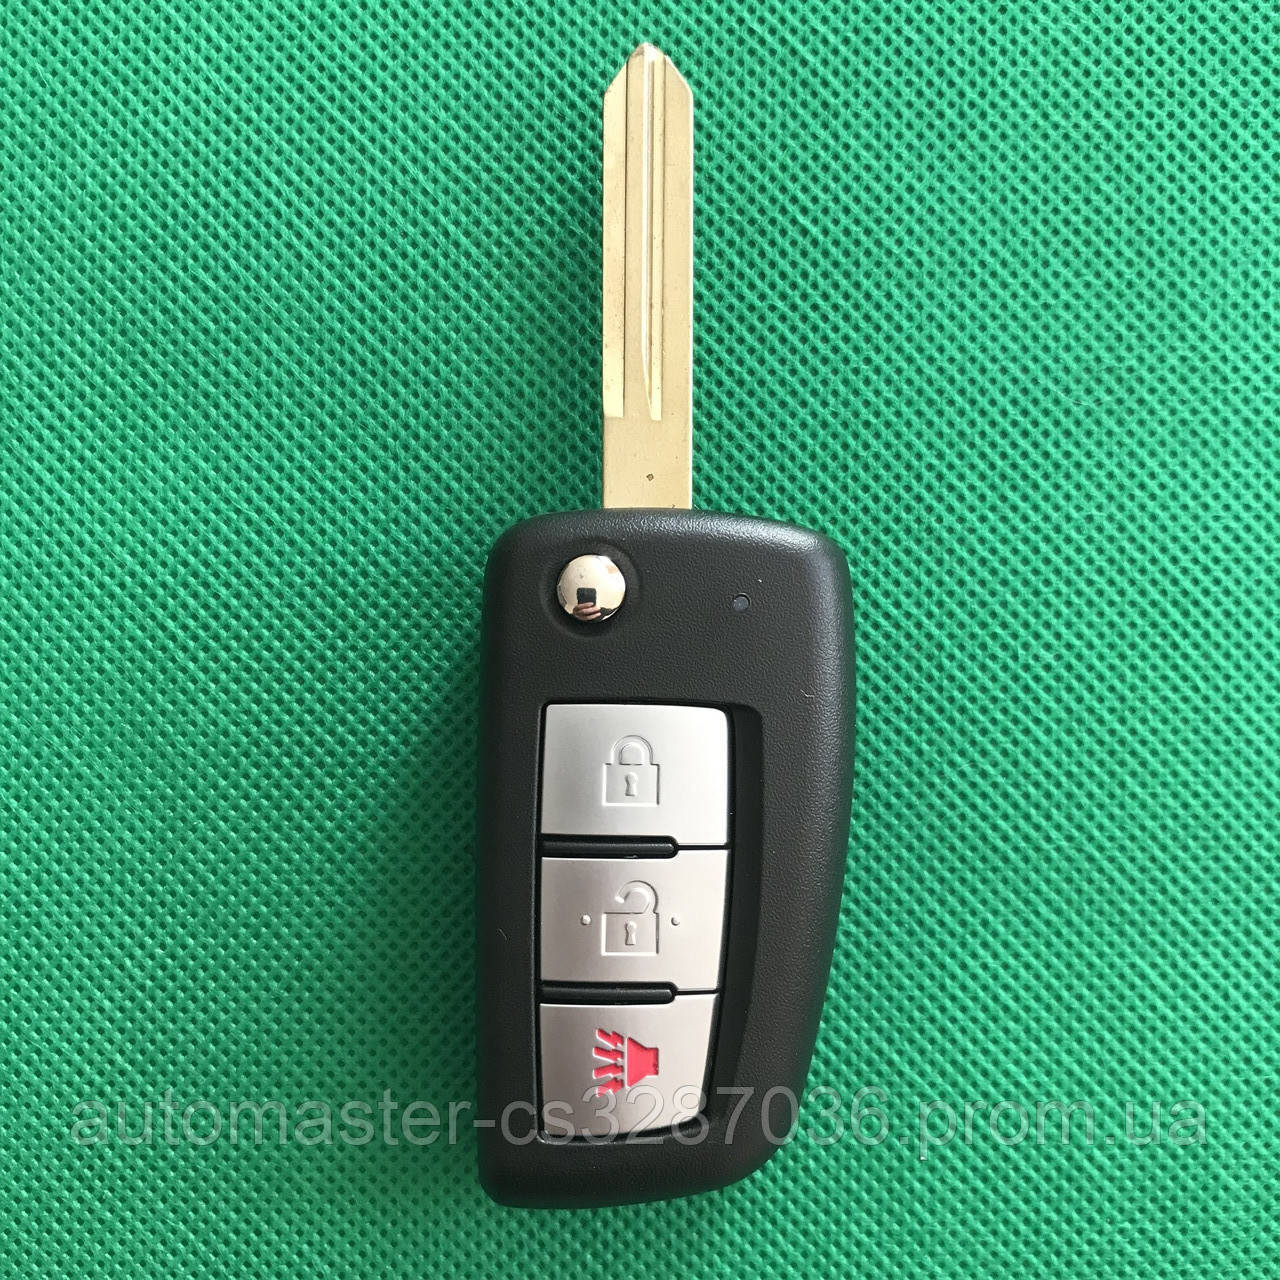 Авто ключ для Nissan (Ниссан) Кашкай, Rouge, Мурано, , 3 - кнопки, америка 315 MHz id 46 лезвие NSN14